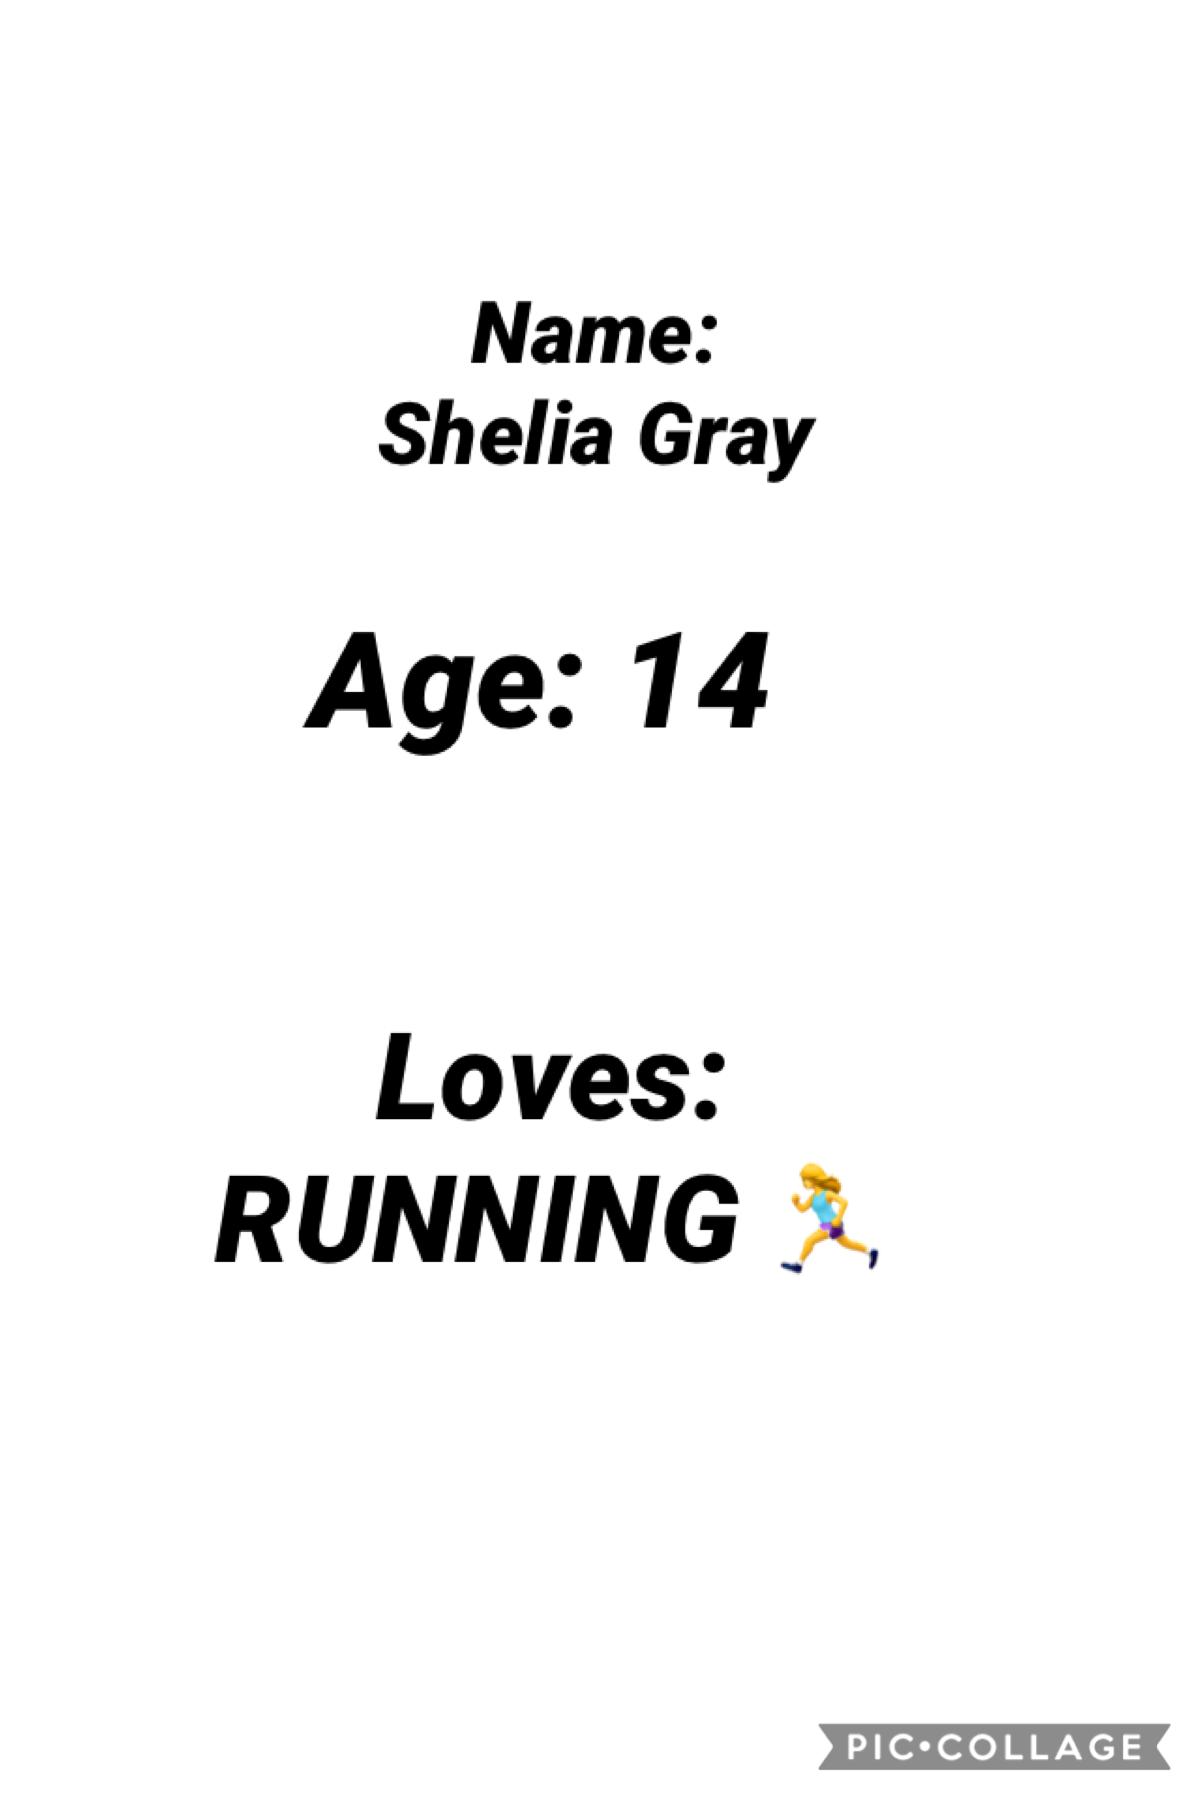 Hi, I am new my name is Shelia Gray!!!! And I love running 🏃‍♀️ 